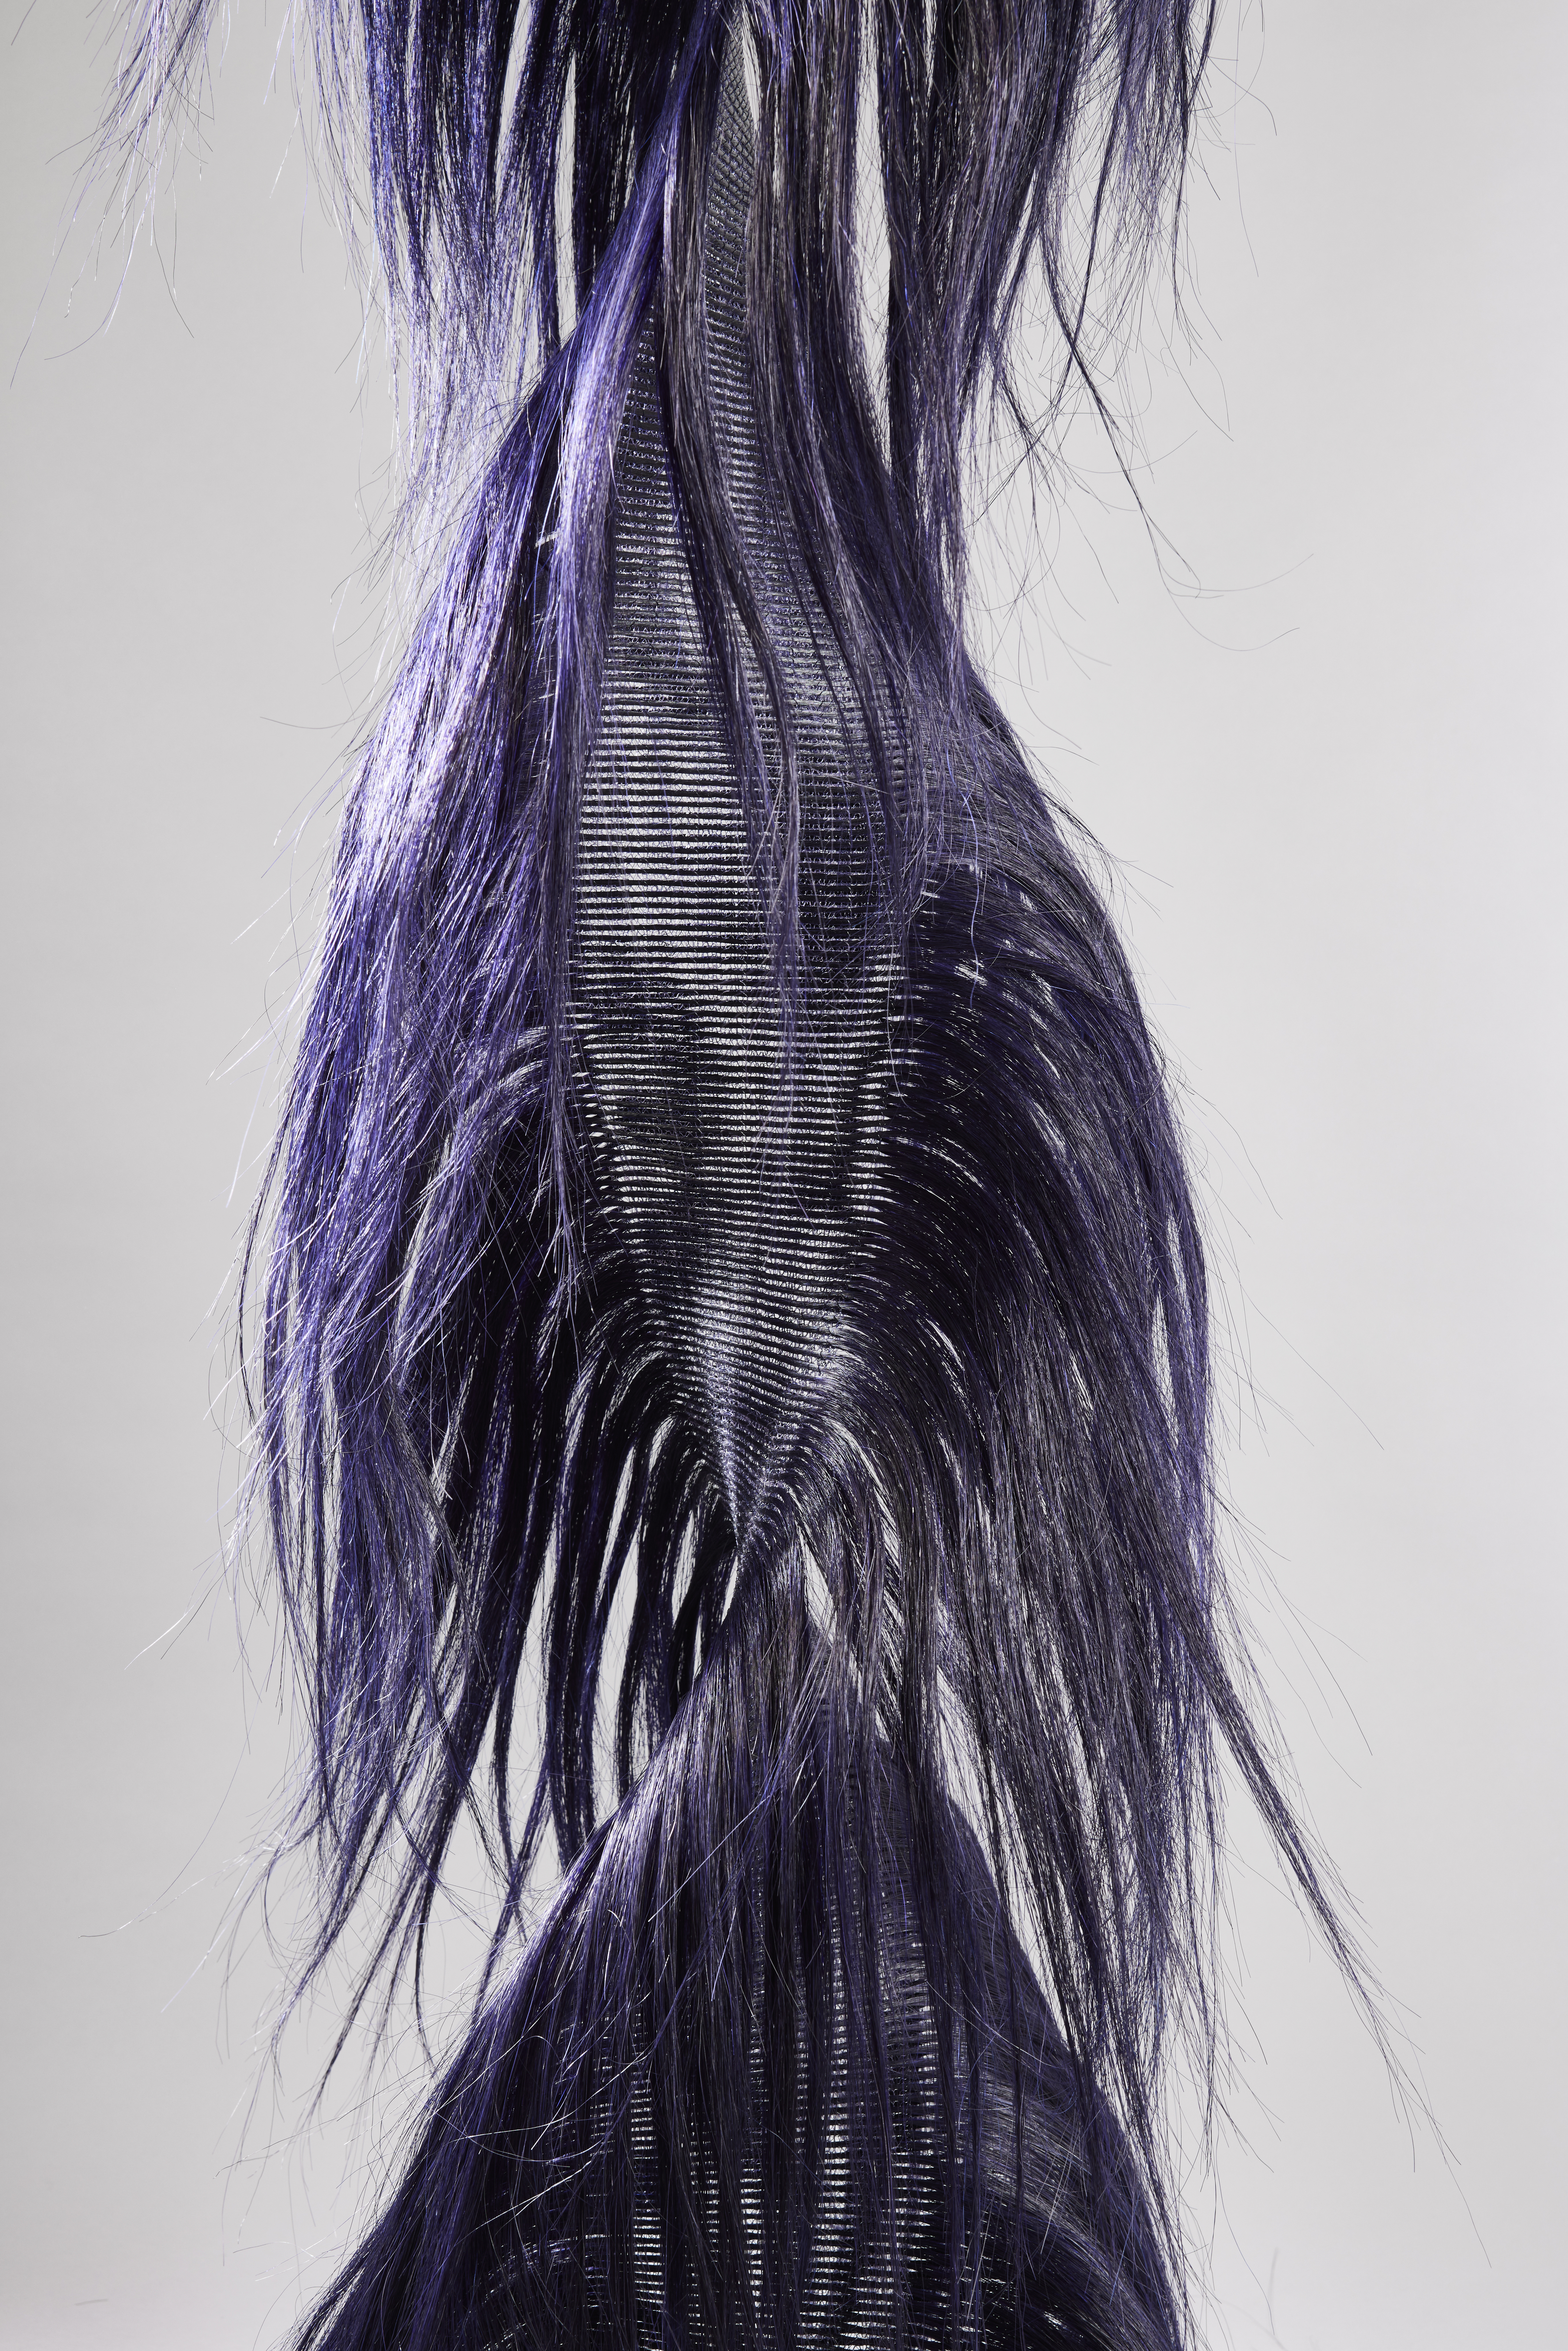 Presence Black Purple - Galerie Negropontes